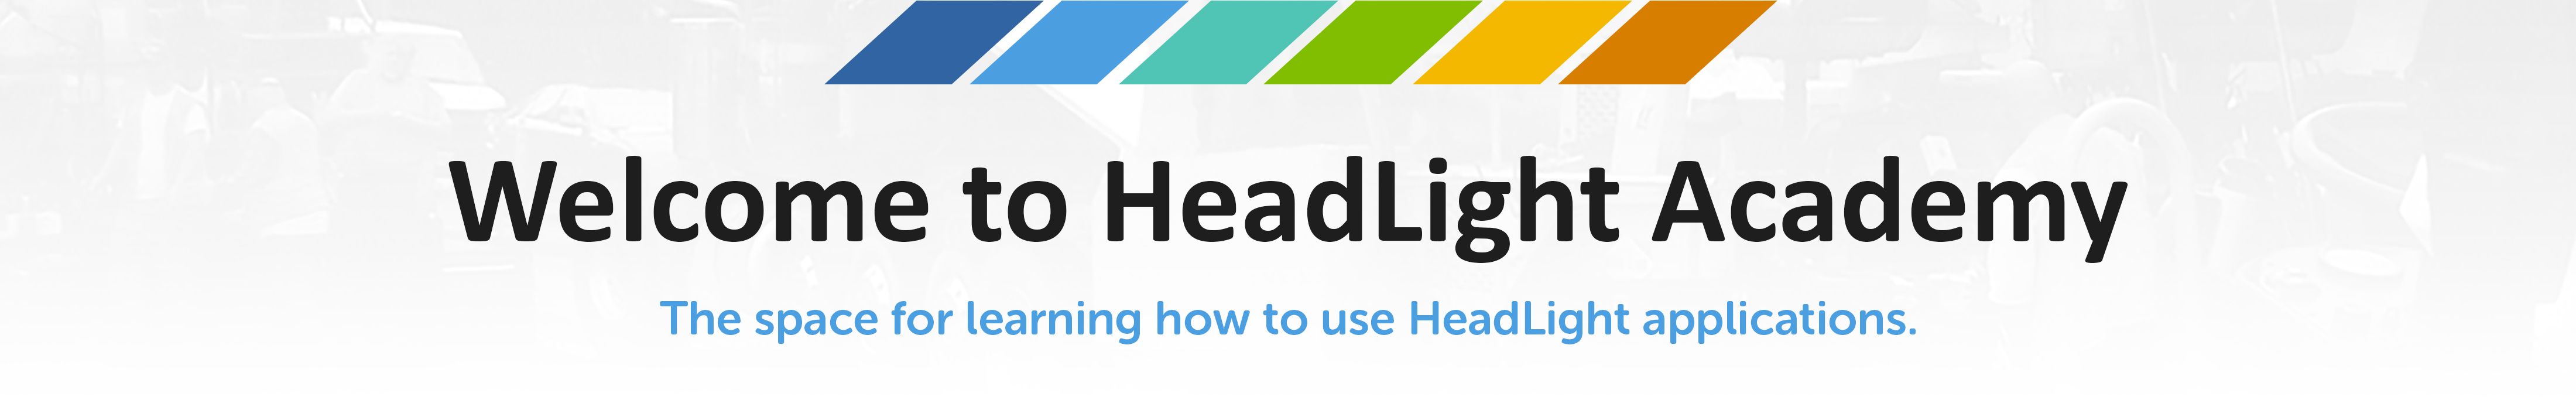 headlight-logo